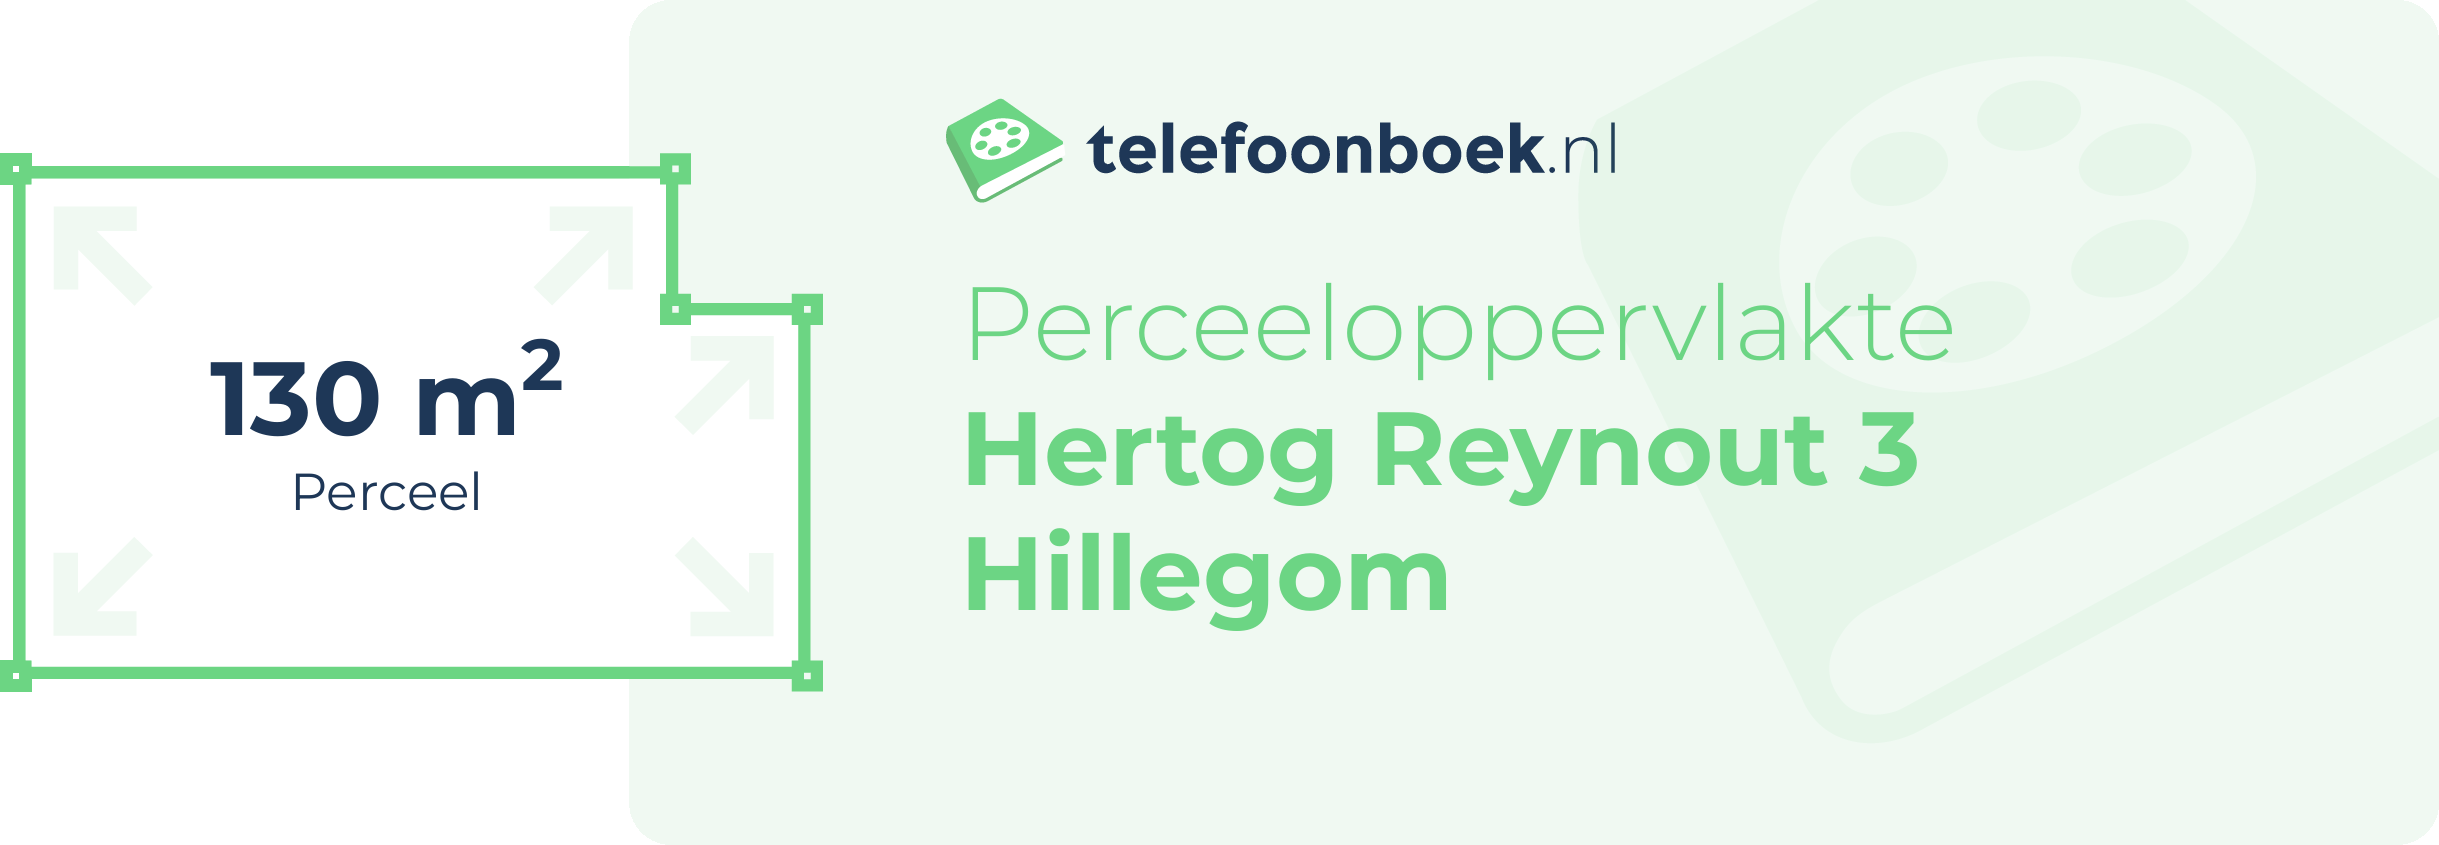 Perceeloppervlakte Hertog Reynout 3 Hillegom